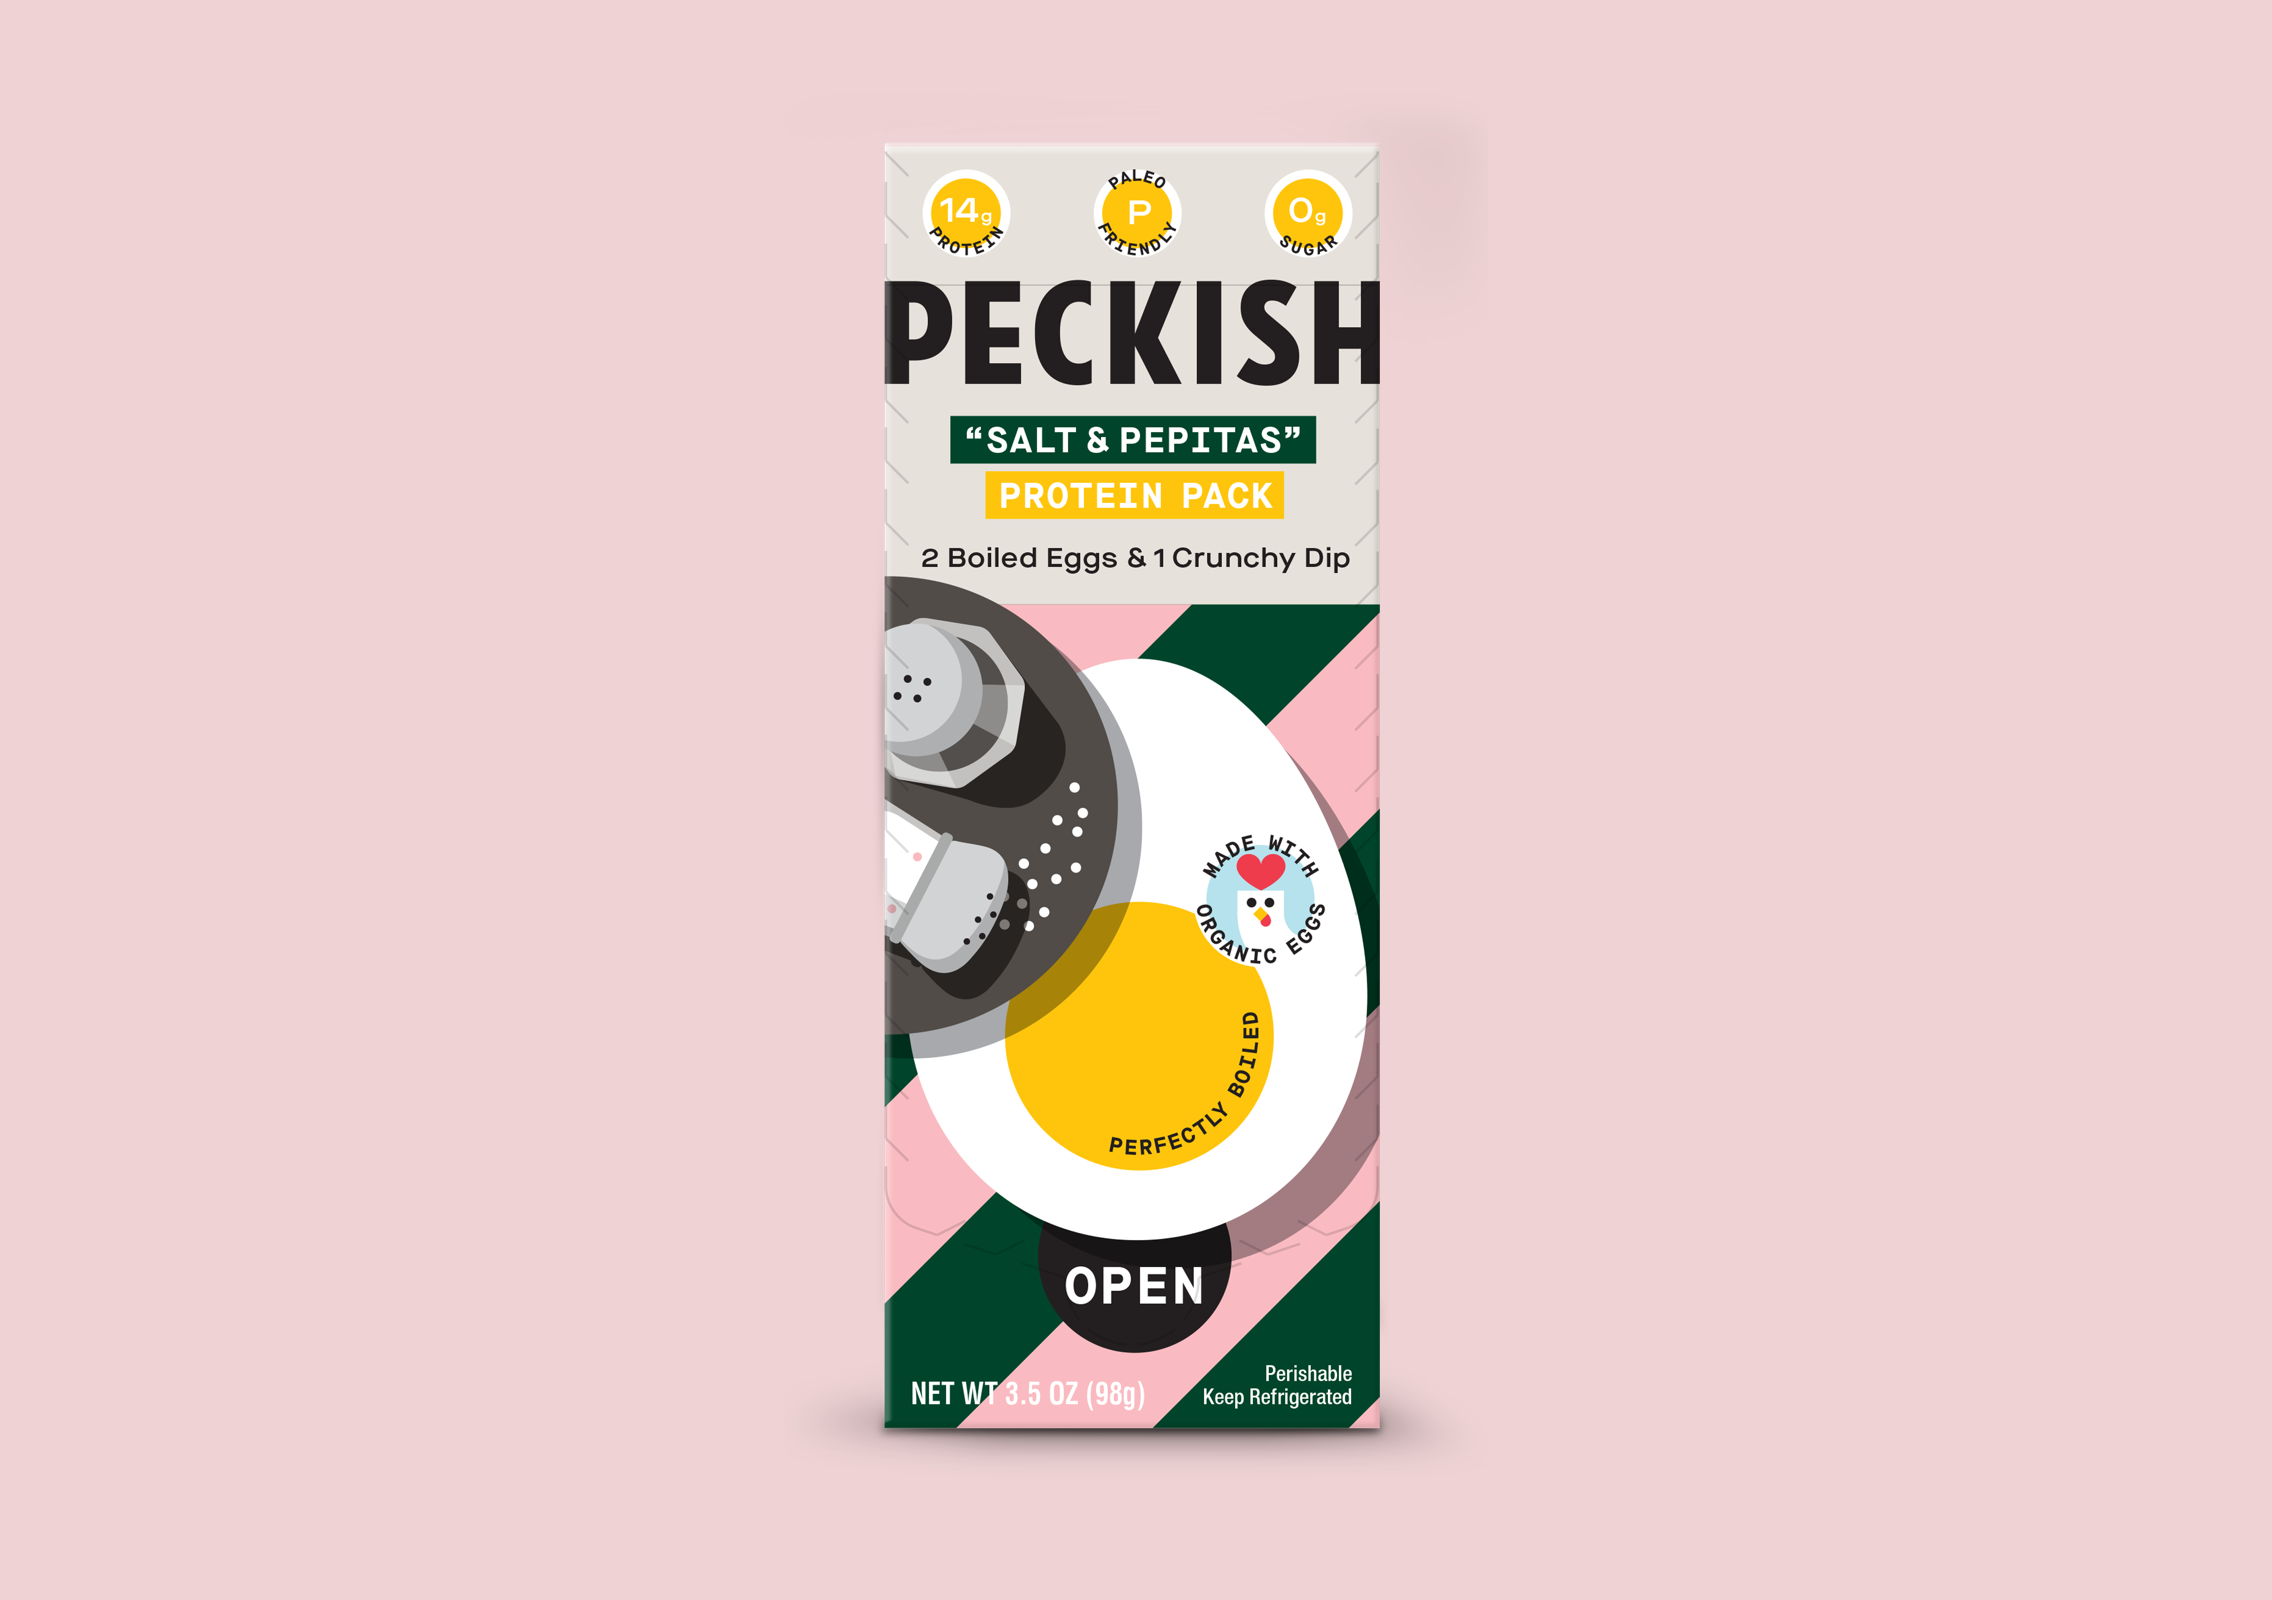 Peckish-image-01